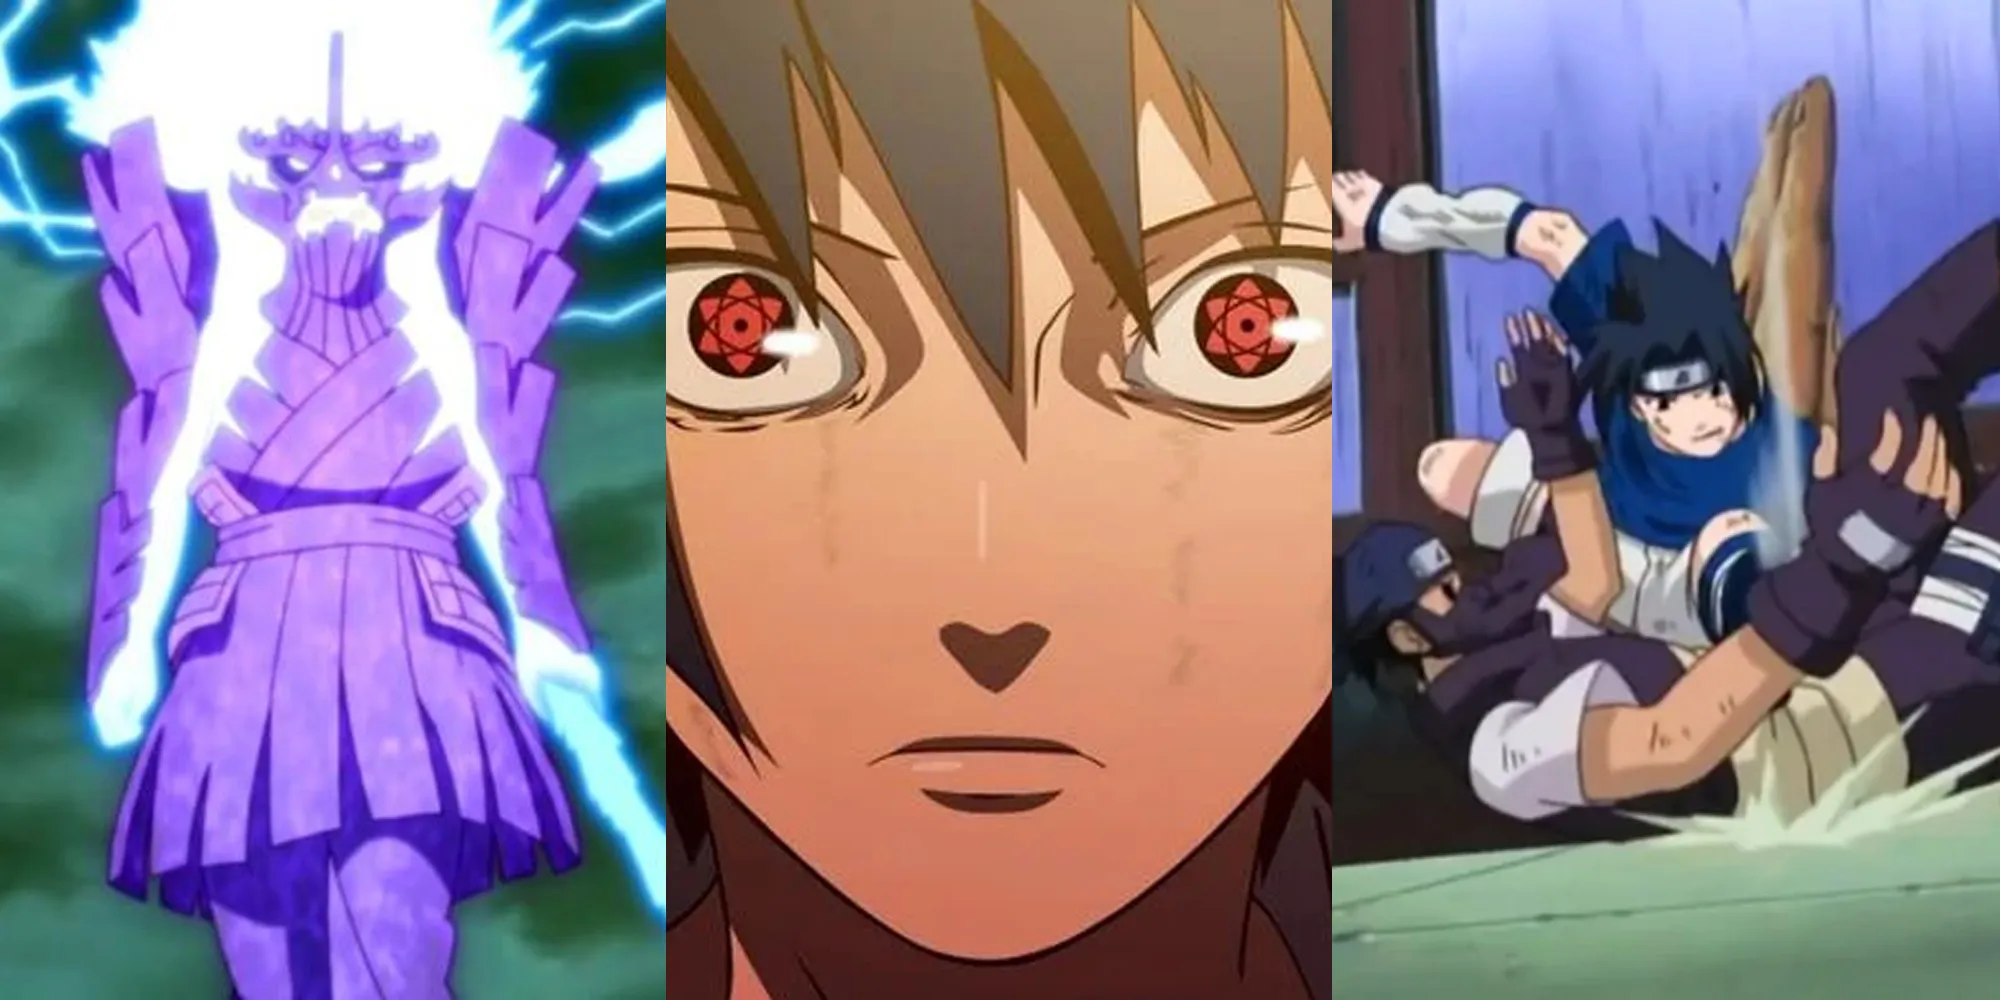 Who can defeat Sasuke with Rinnegan? - Quora